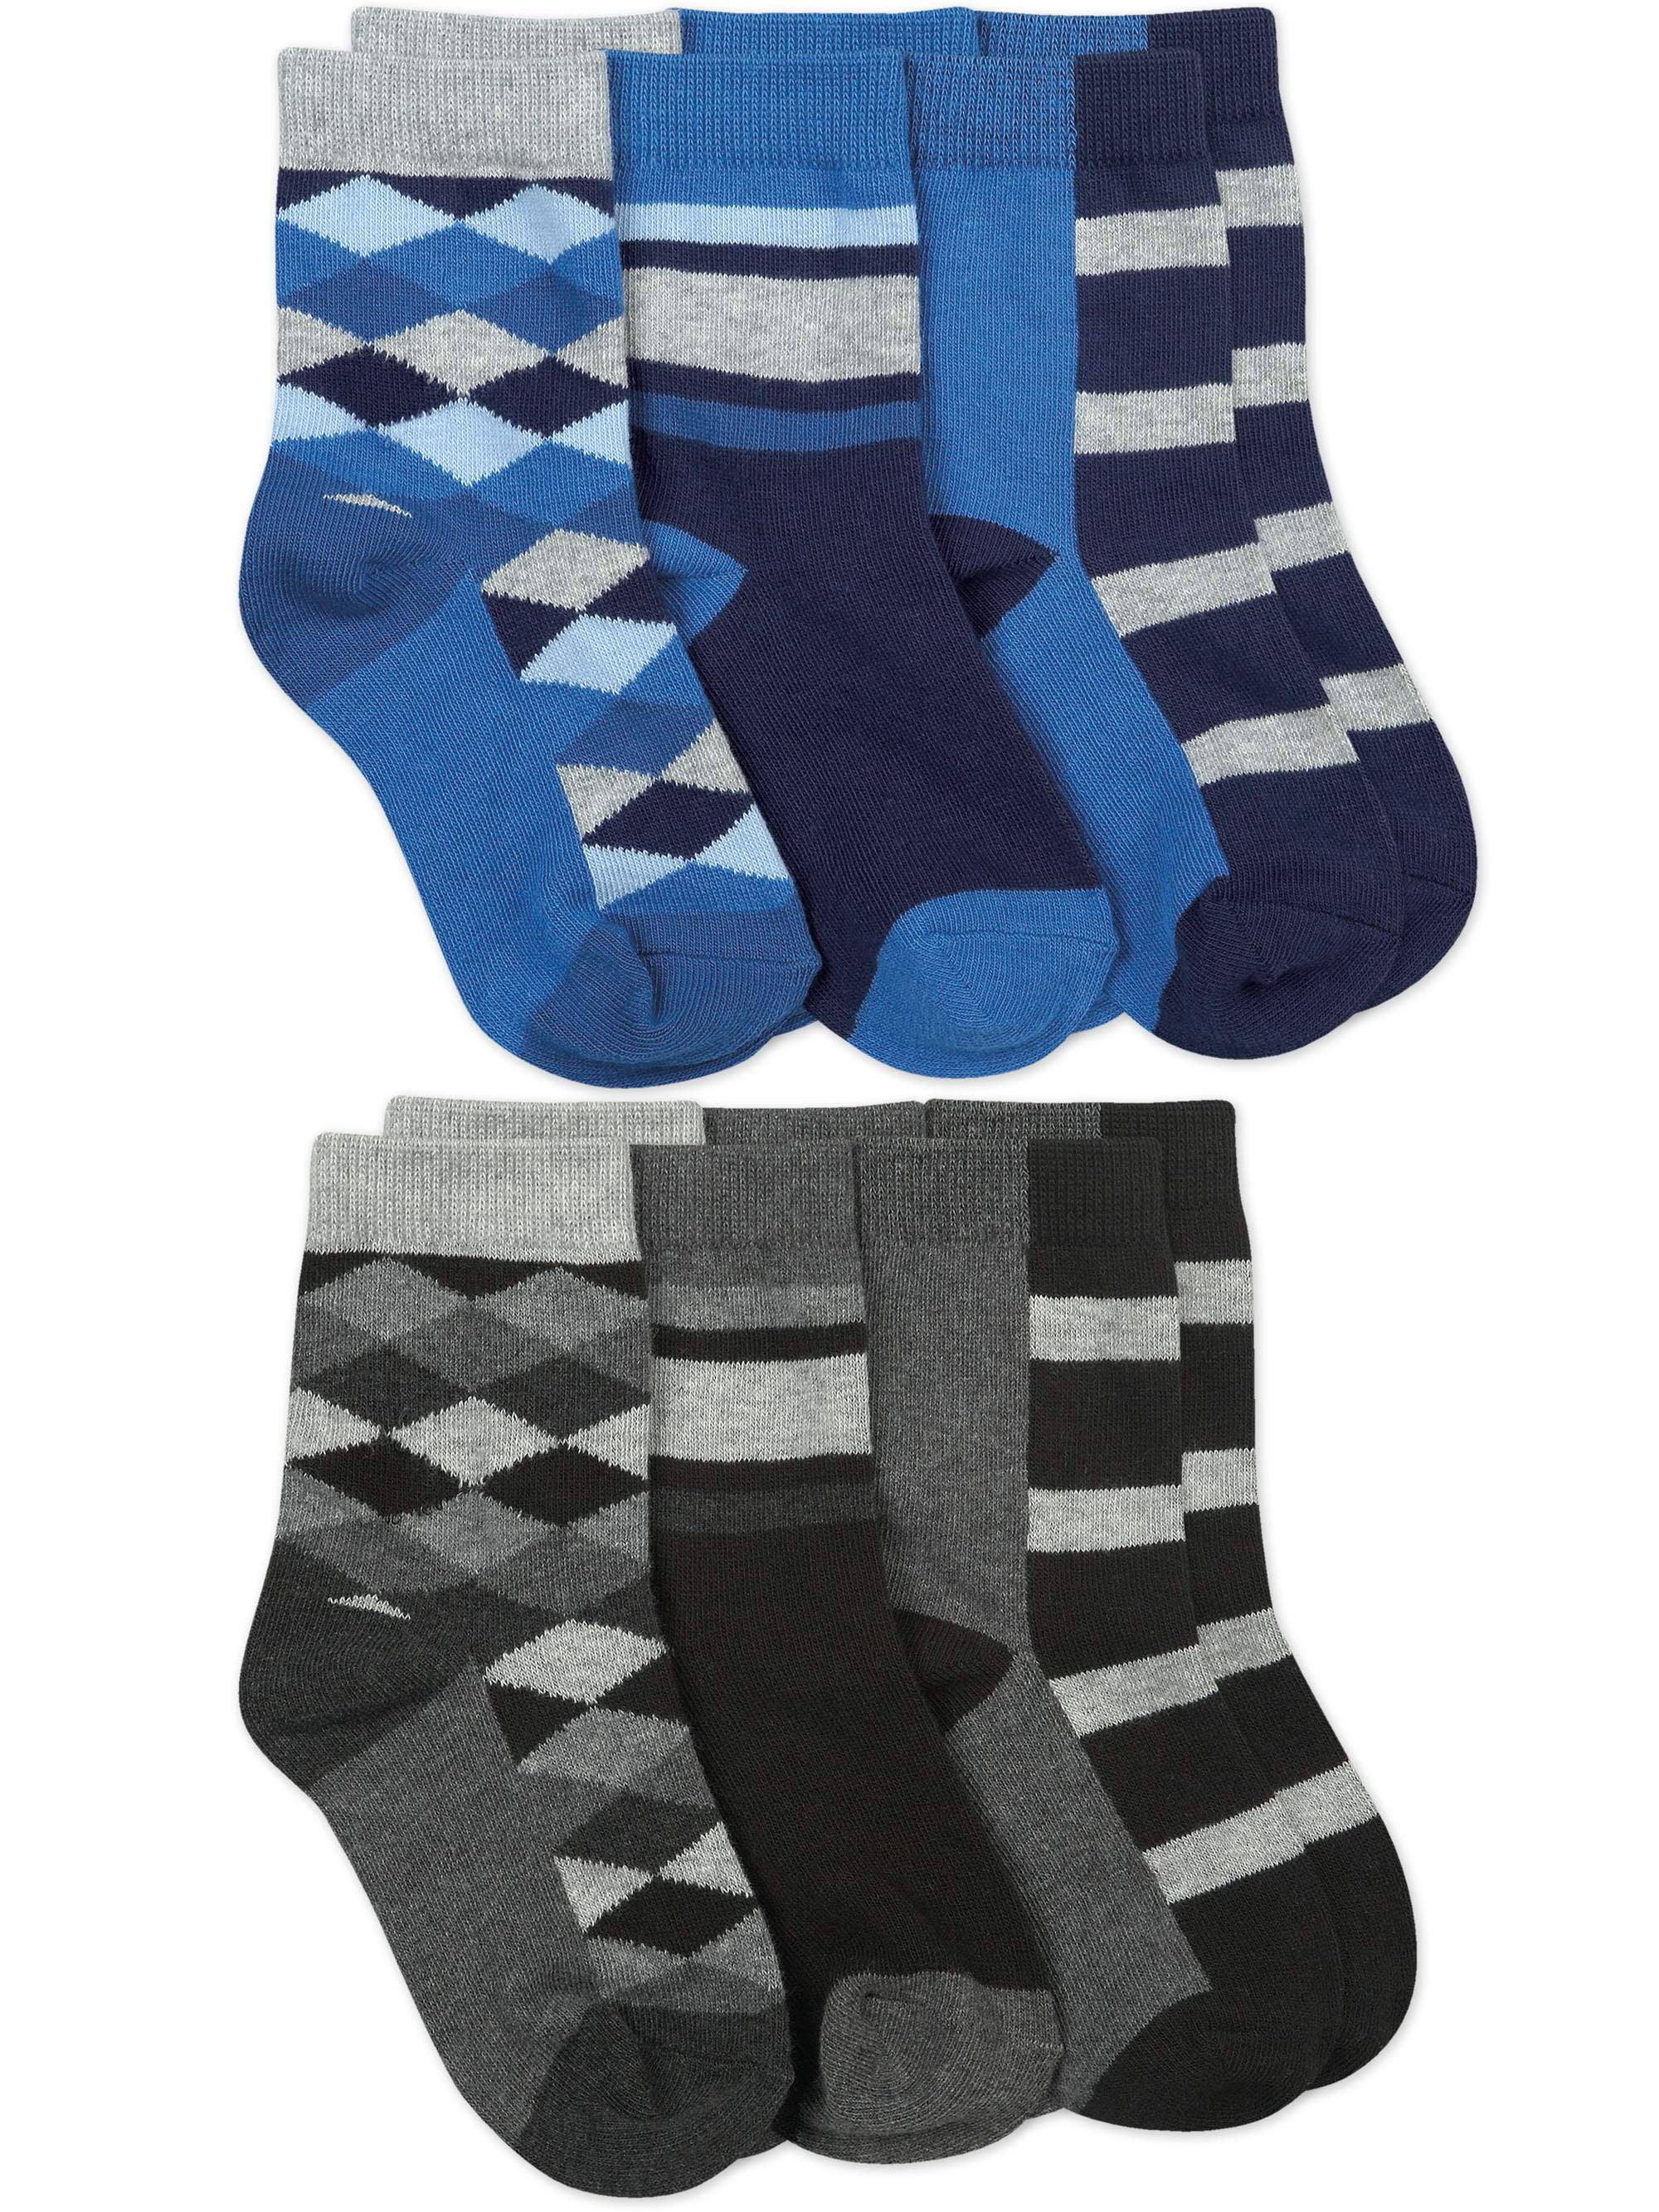 Jefferies Socks Boys Multicolored Stripe Fashion Variety Crew Socks 12 Pair Pack 